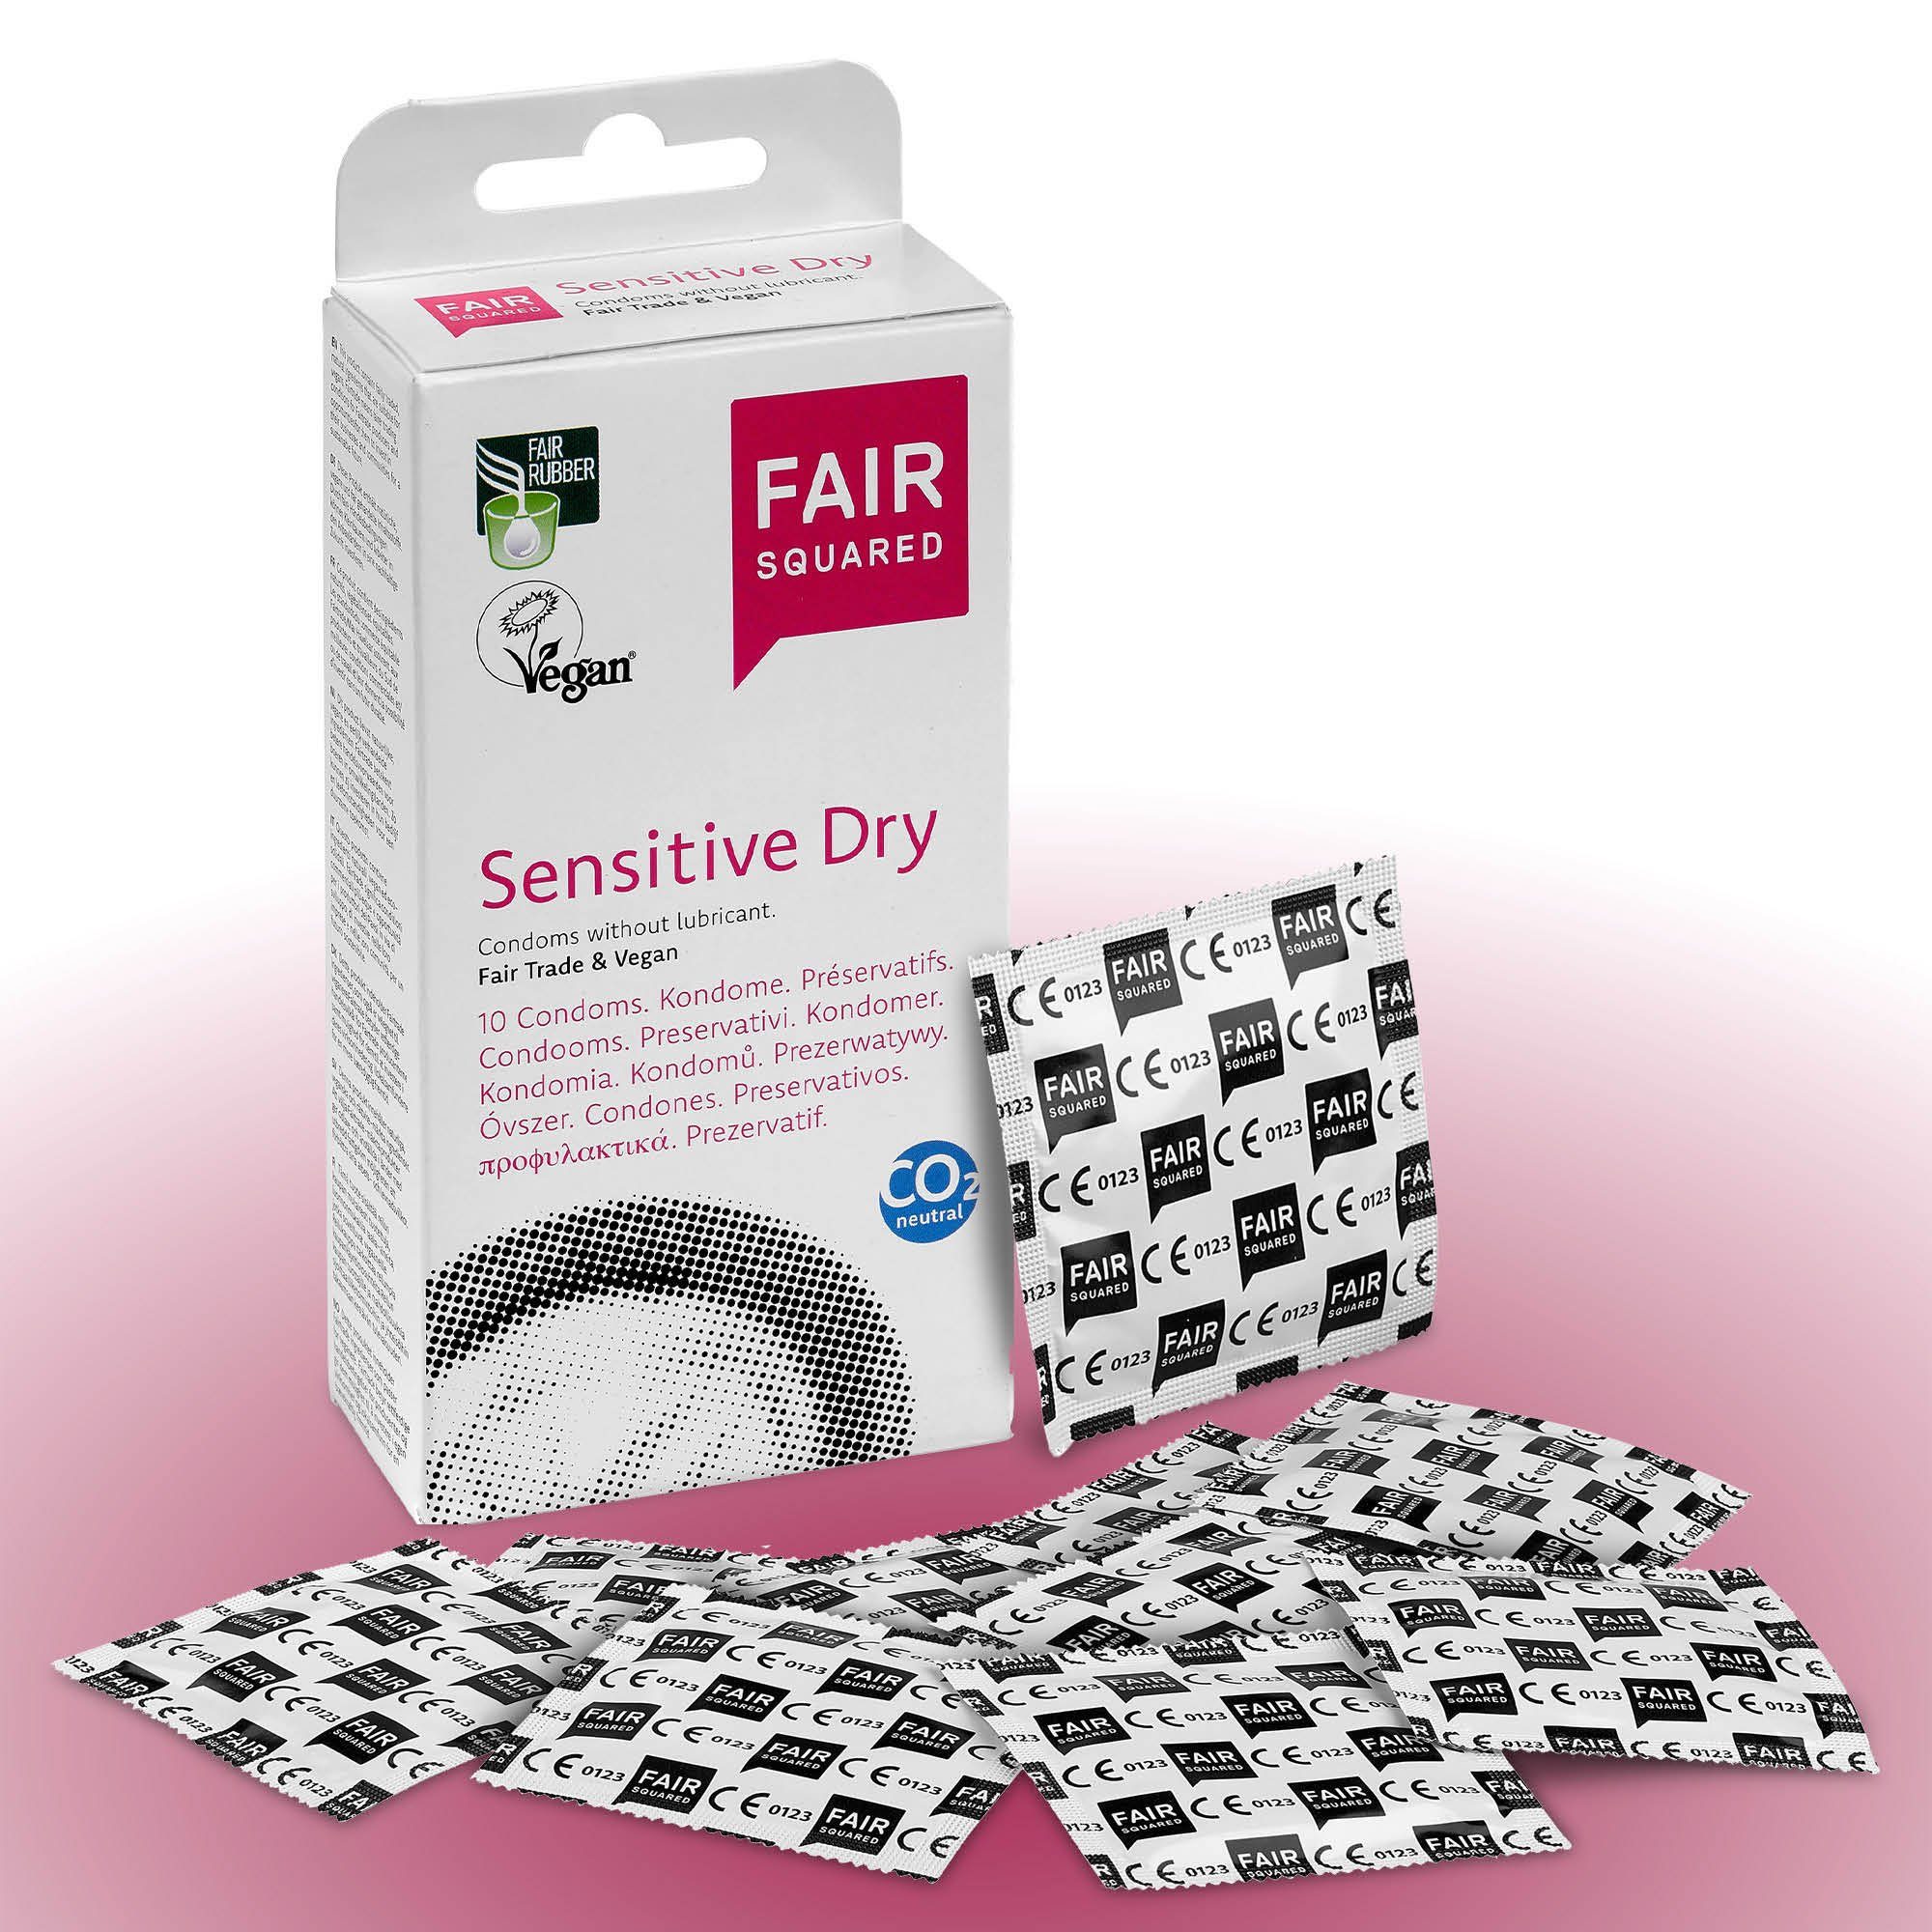 Sensitive Dry – – hauchzart Kondom Naturkautschuk Fair fair gehandeltem aus 100er Squared Kondome FAIR 53 mm Vegane SQUARED gefühlsecht Kondome Kondome